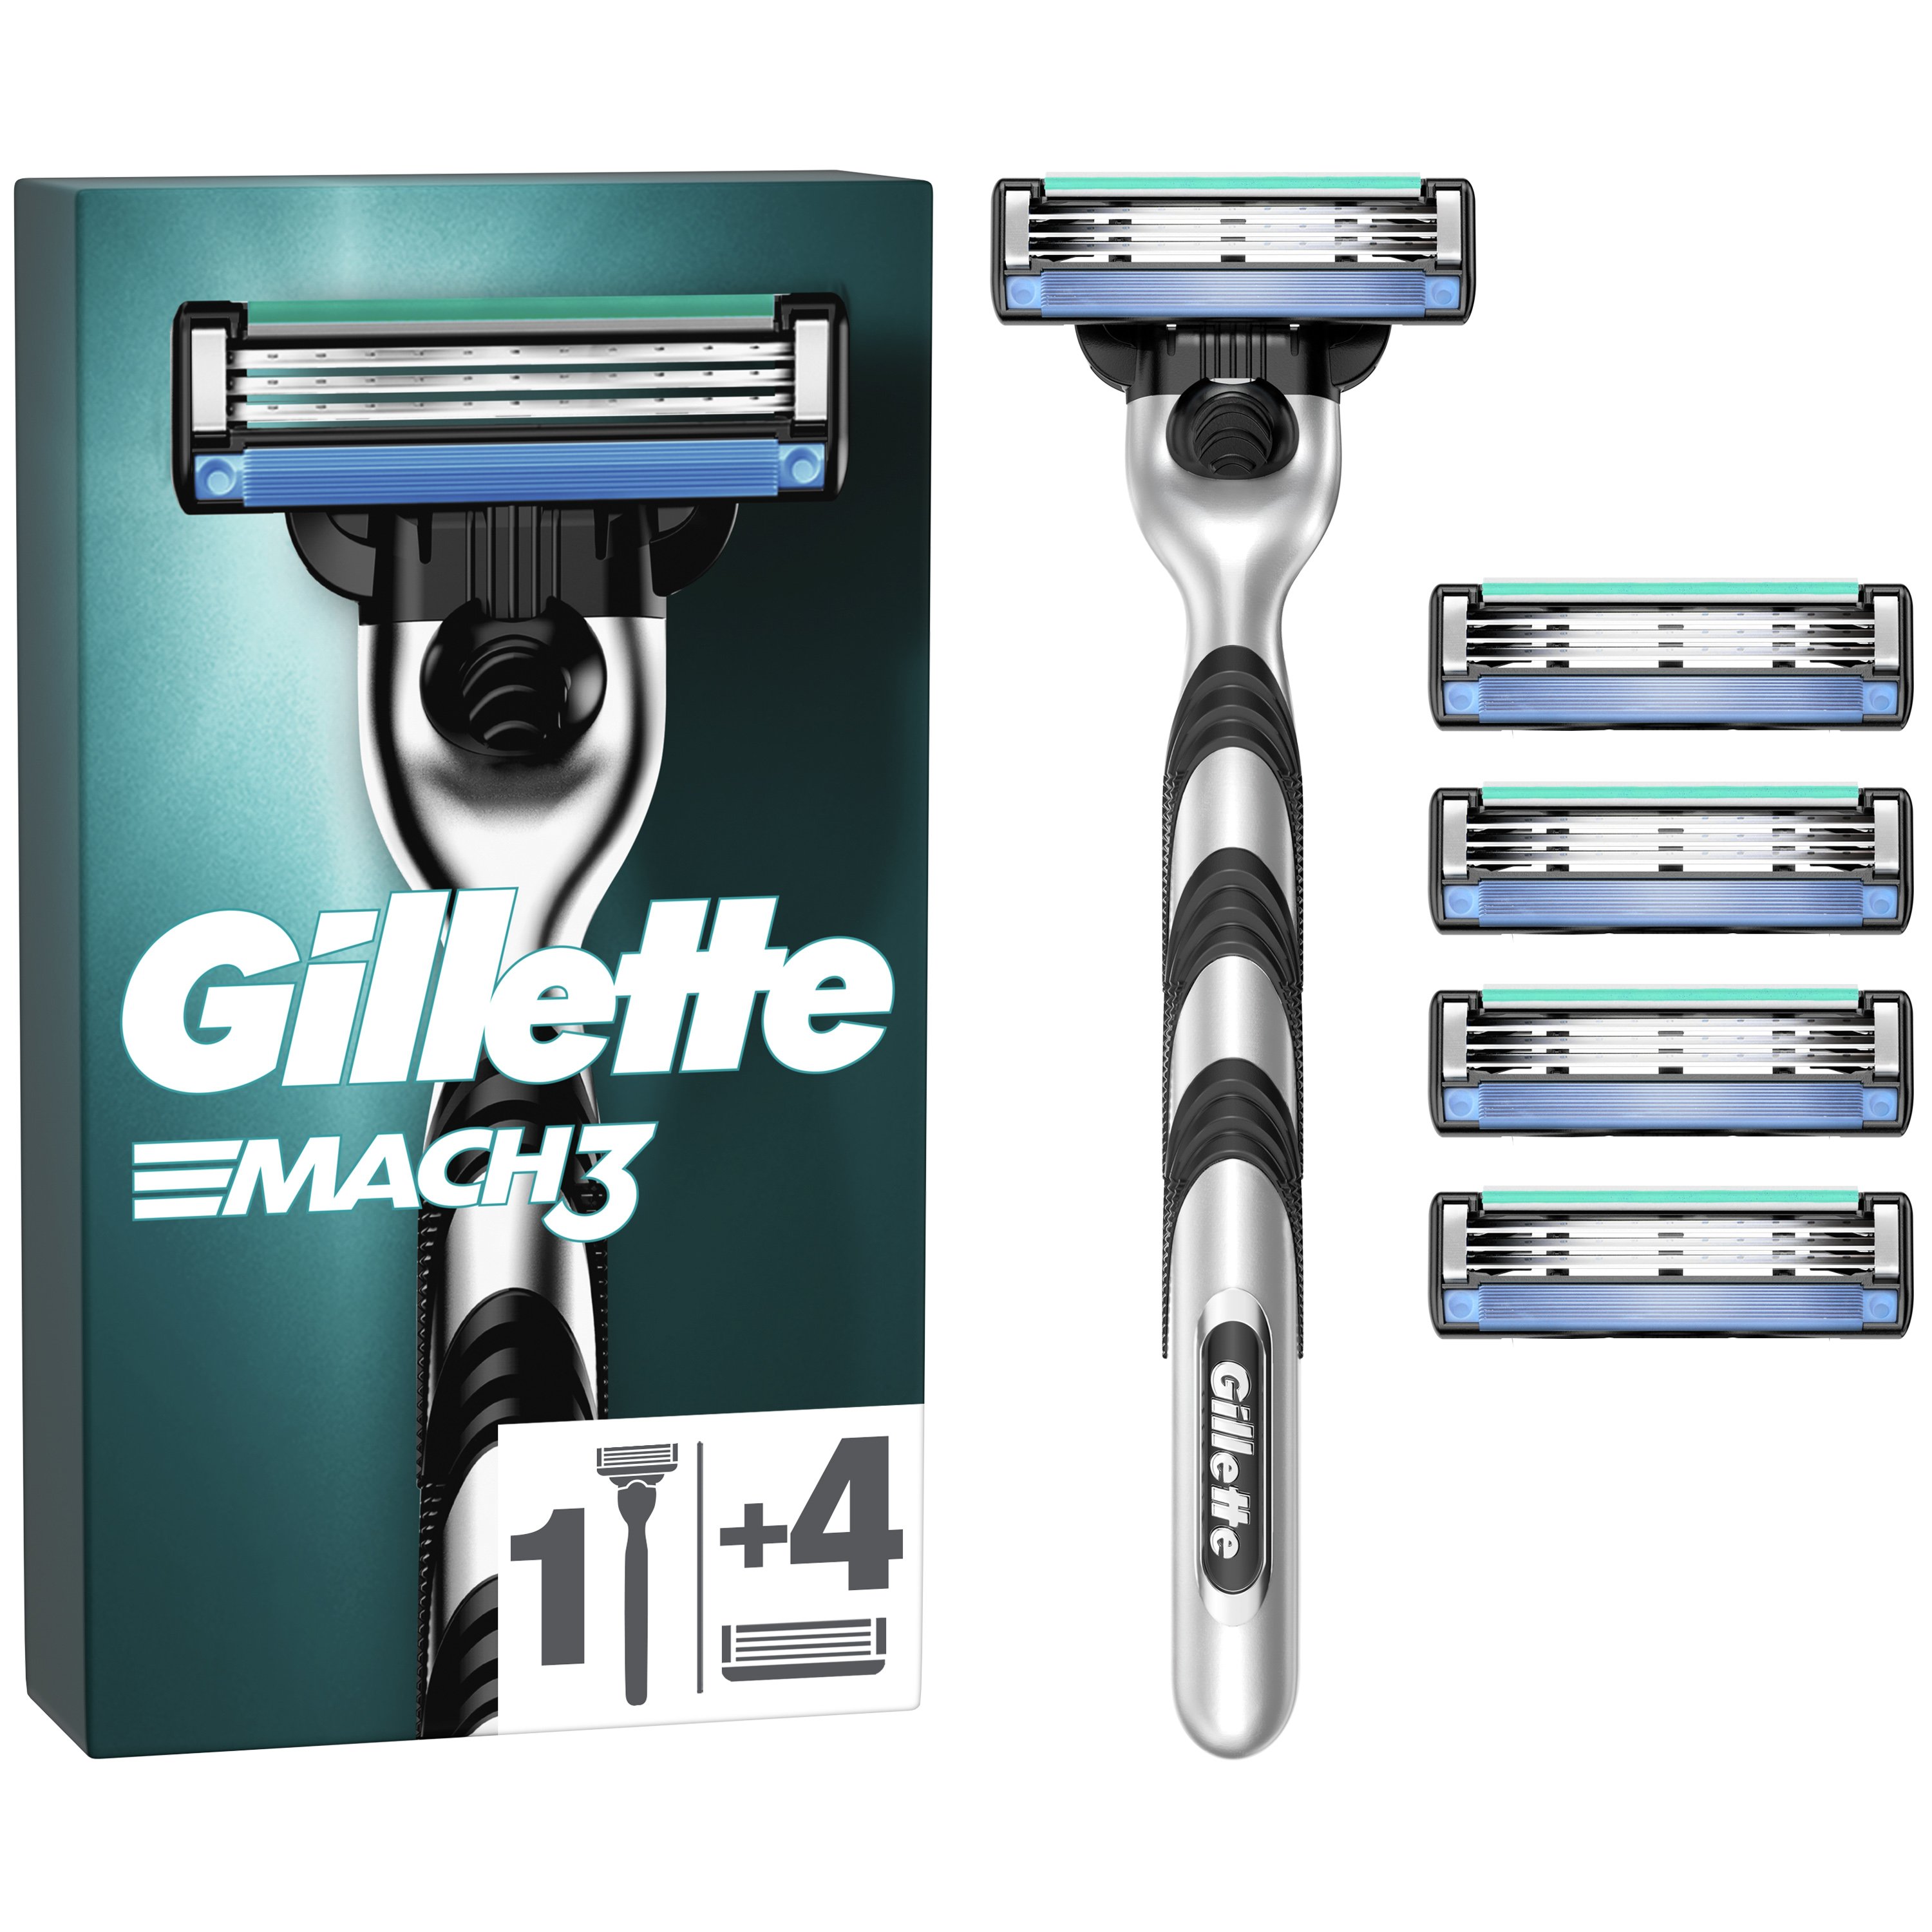 Gillette Promo Mach3 Male Premium BladeRazor System Ανταλλακτικές Κεφαλές Ξυρίσματος 5 Τεμάχια & Δώρο Λαβή 1 Τεμάχιο